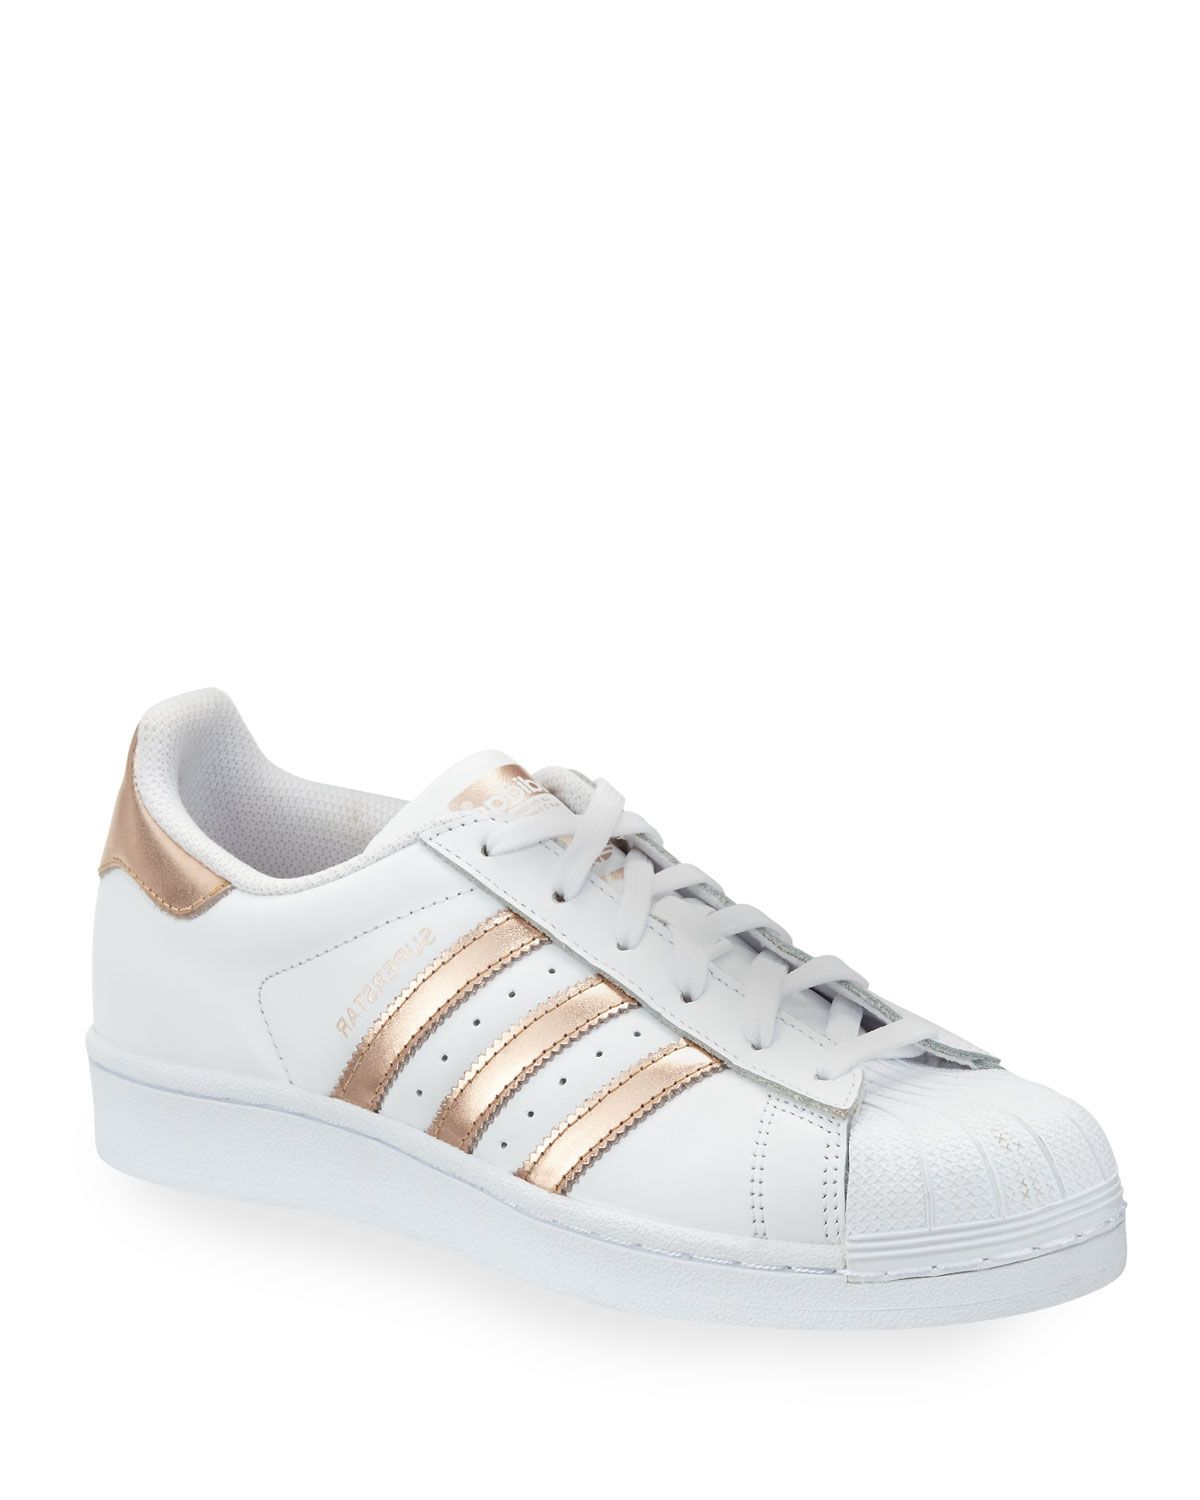 Adidas Superstar Original Fashion Sneaker, White/Rose Gold | Neiman Marcus